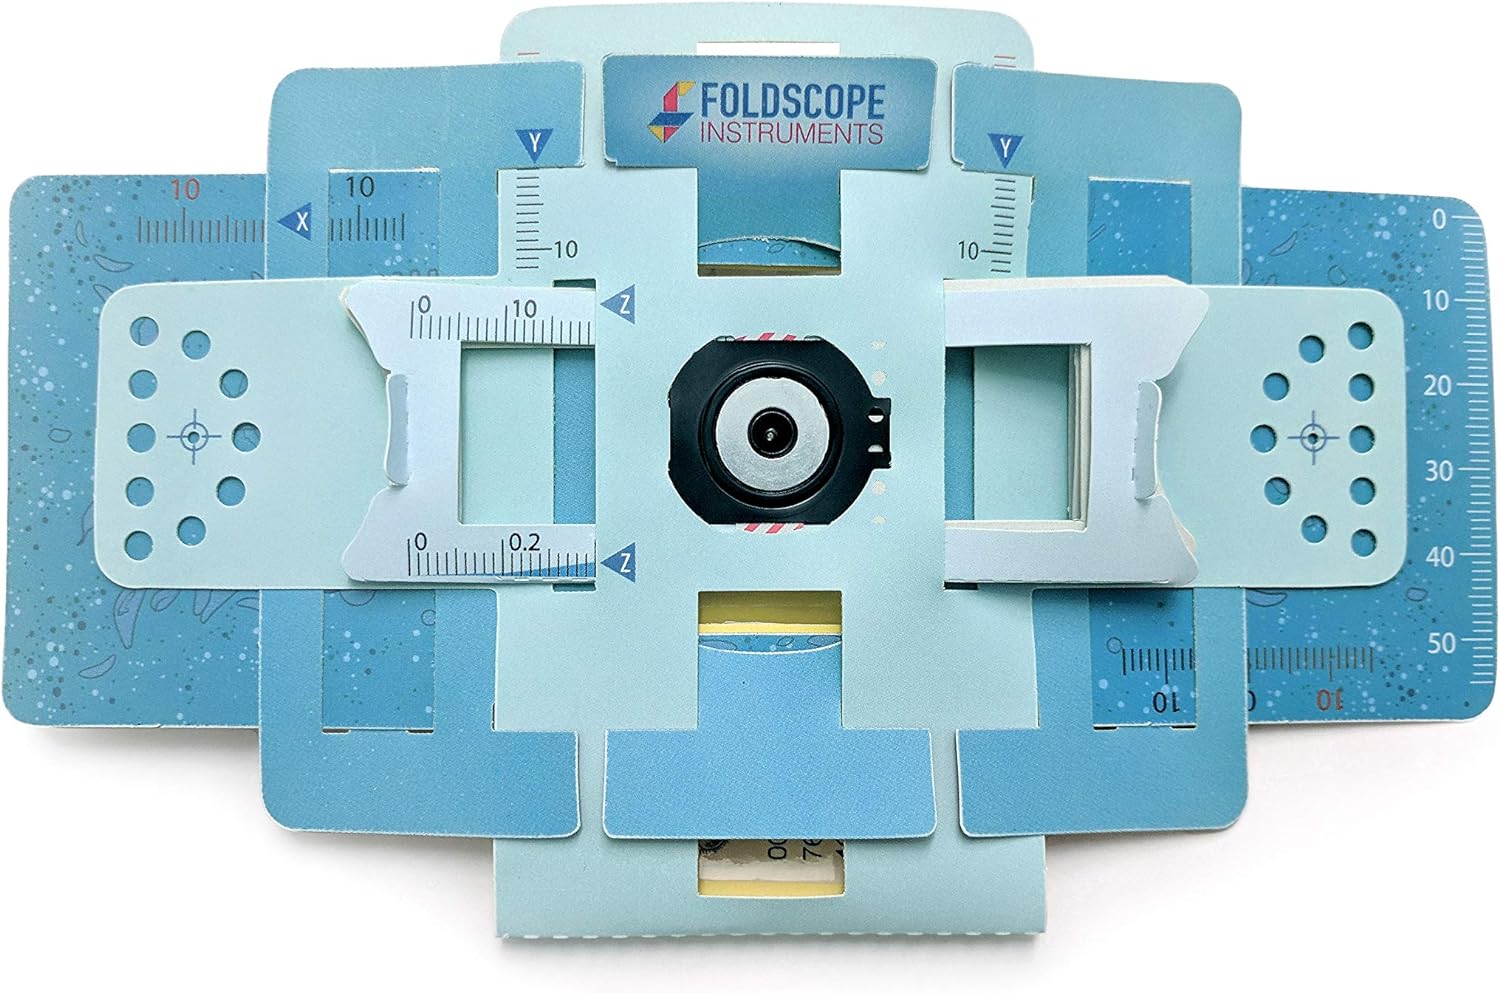 Foldscope paper microscope